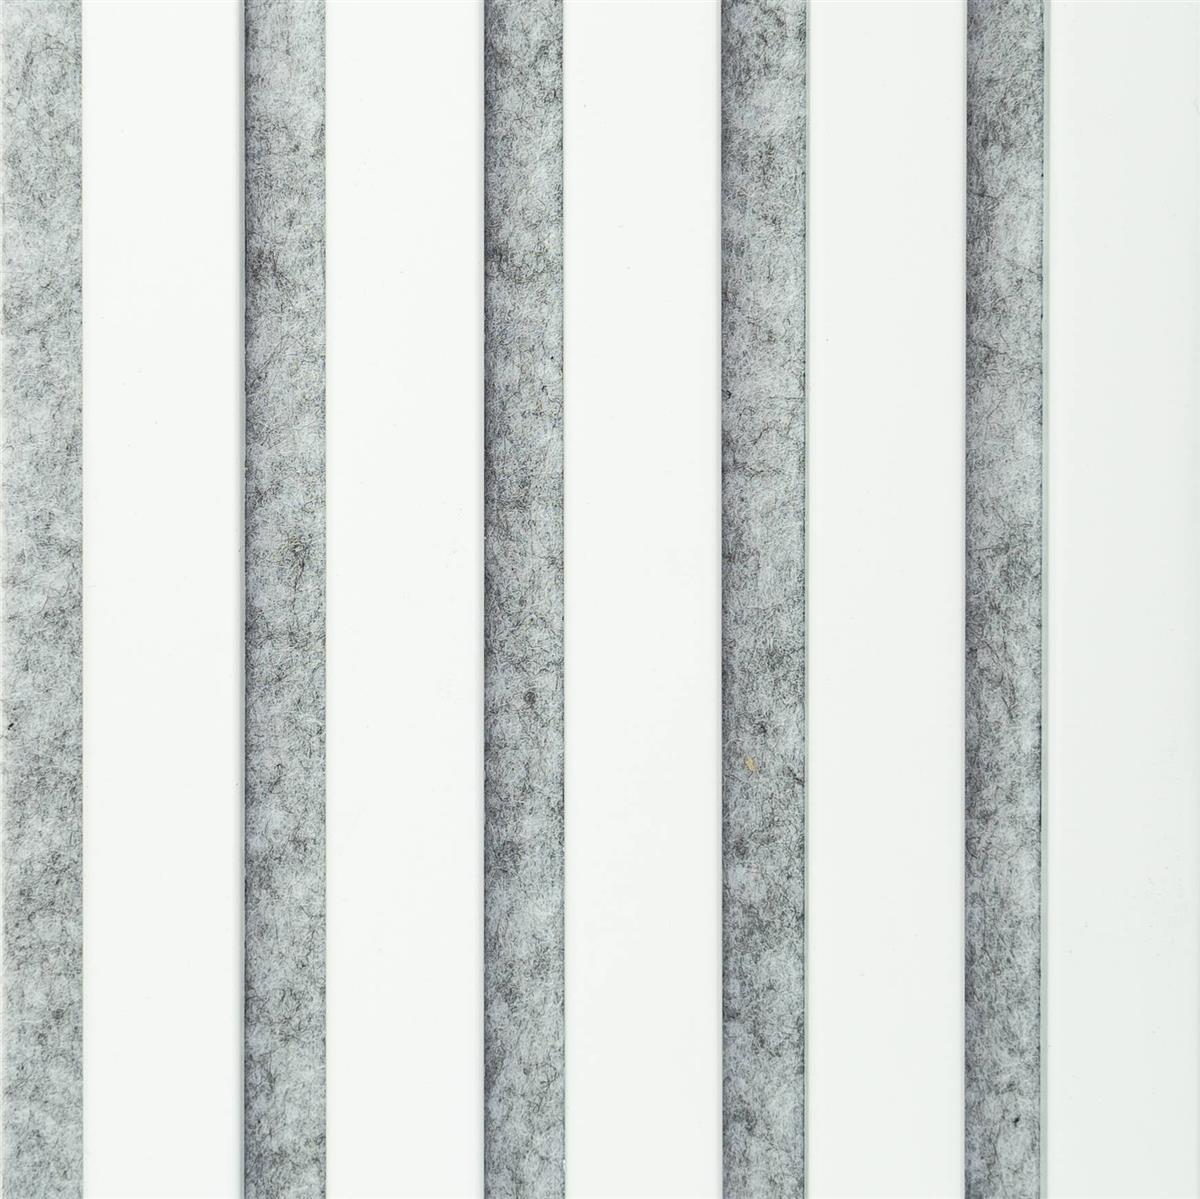 JOKA Paro Akustik Wandpaneele PAG220 240 cm Weiß lackiert 9016 ähnlich, graues Vlies